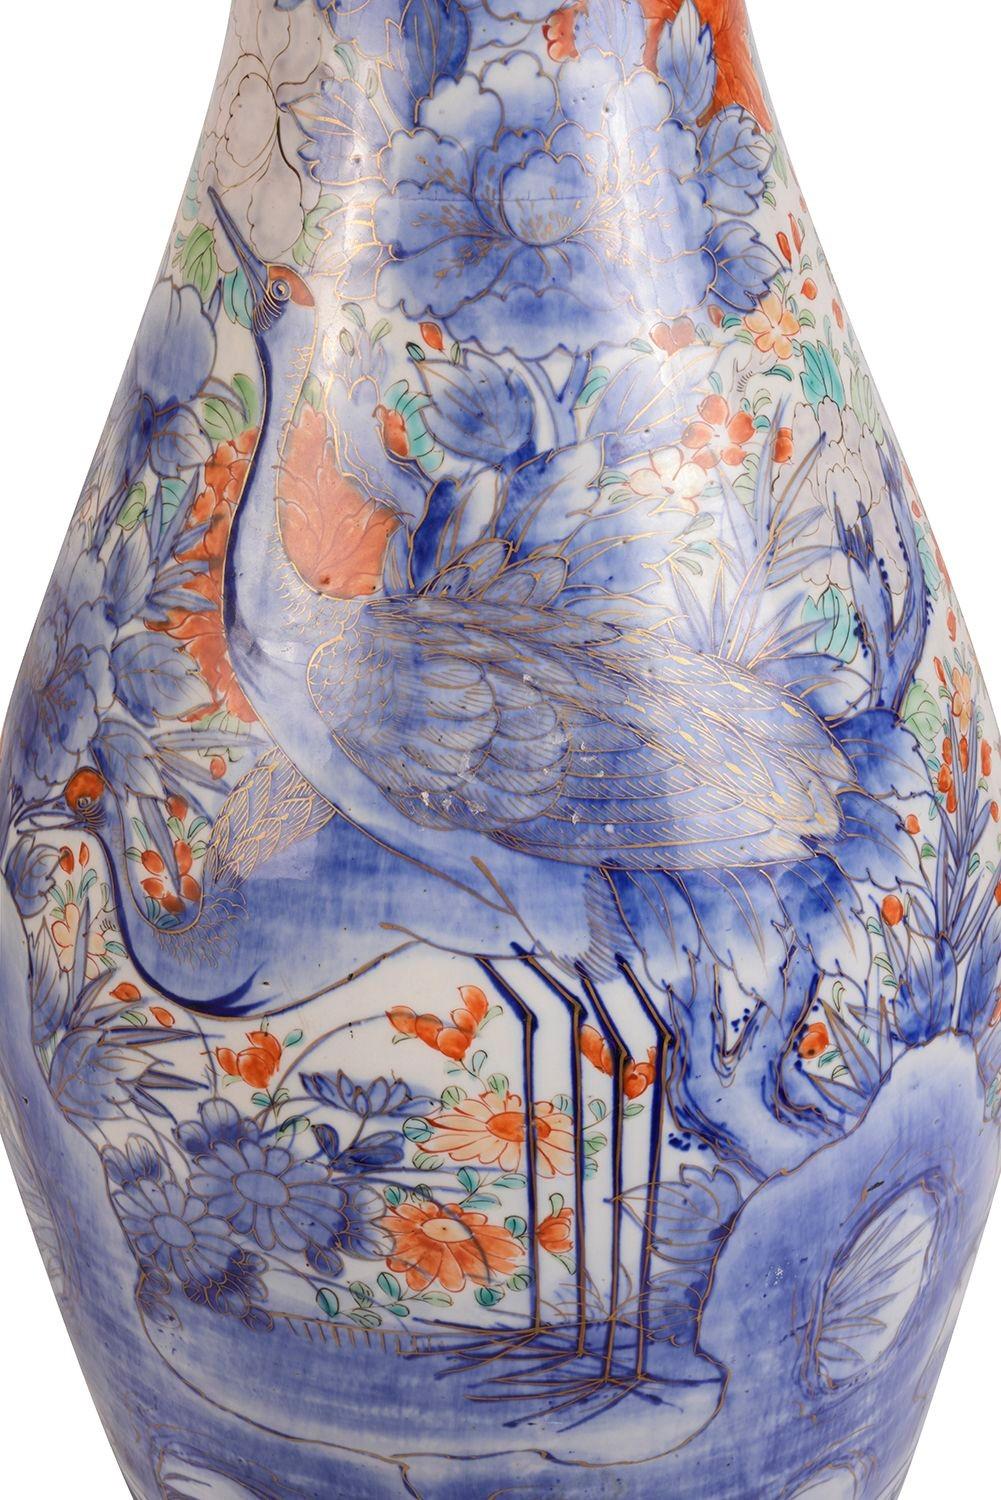 Porcelain Large 19th Century Japanese Imari vase. For Sale